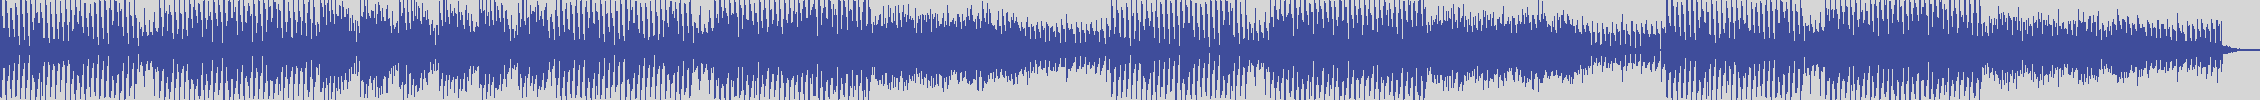 nf_boyz_records [NFY089] Hipno Typo - Hypno Typo [Japan Min] audio wave form